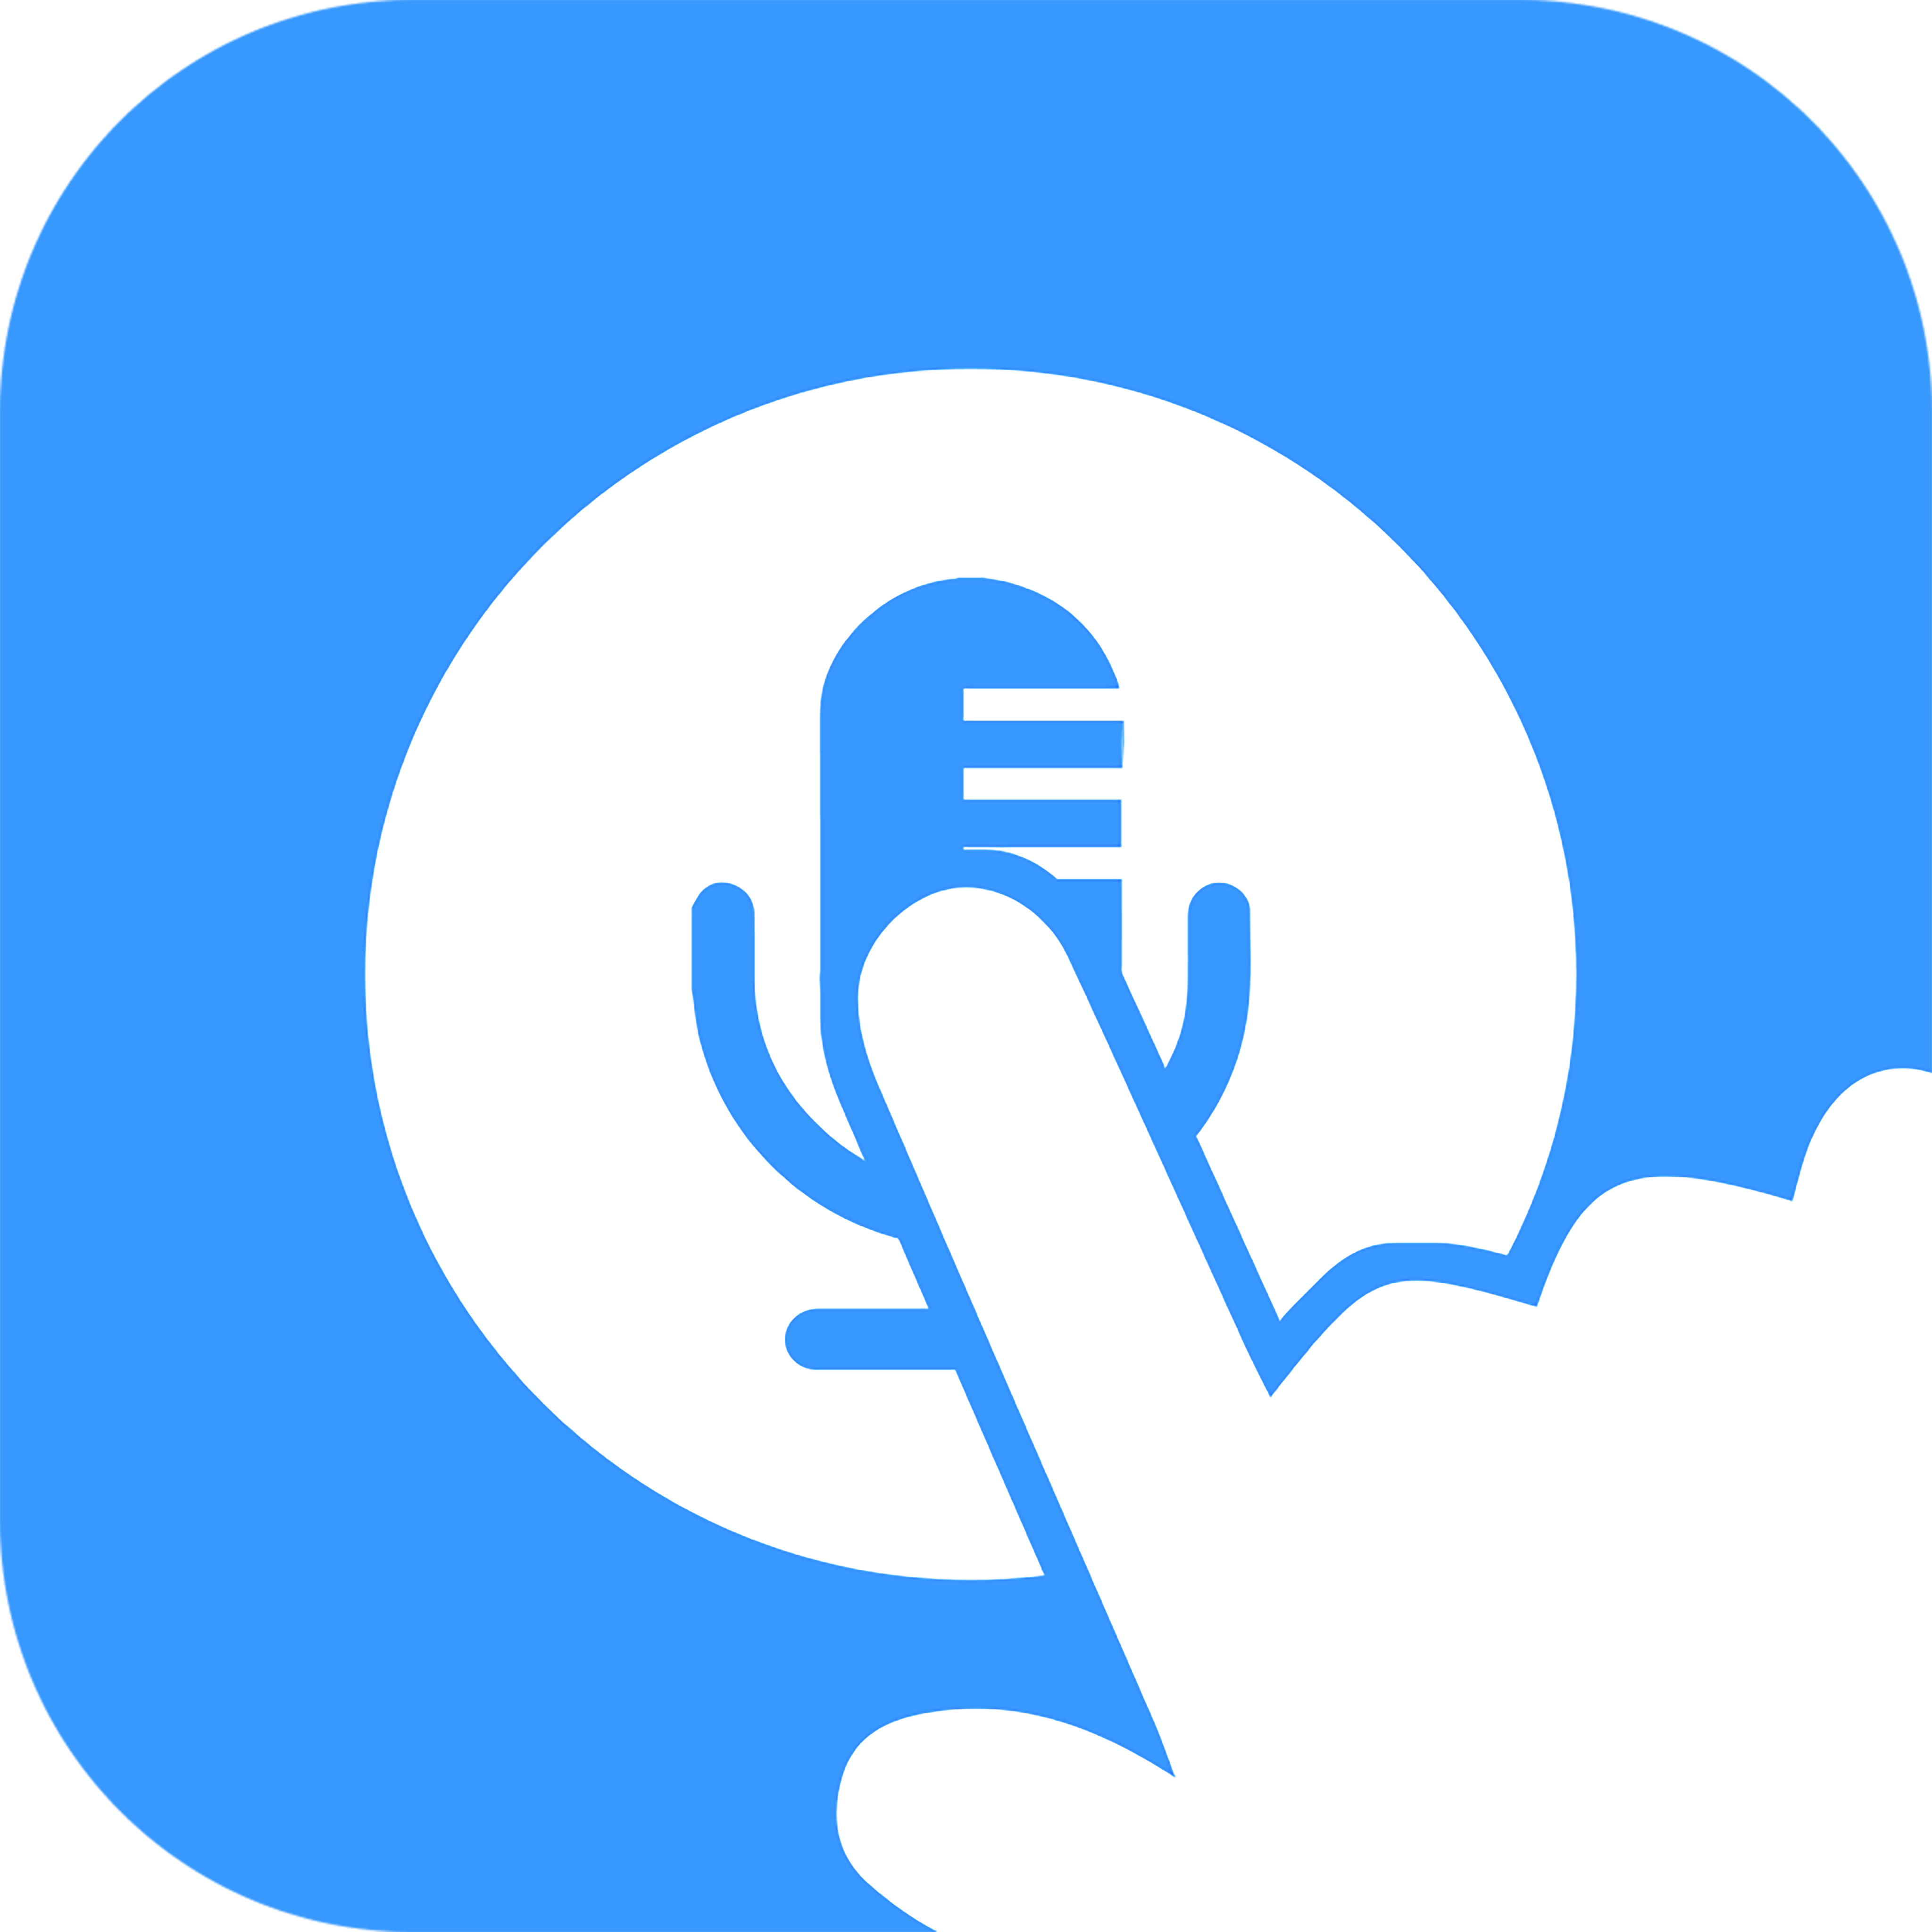 指尖配音app